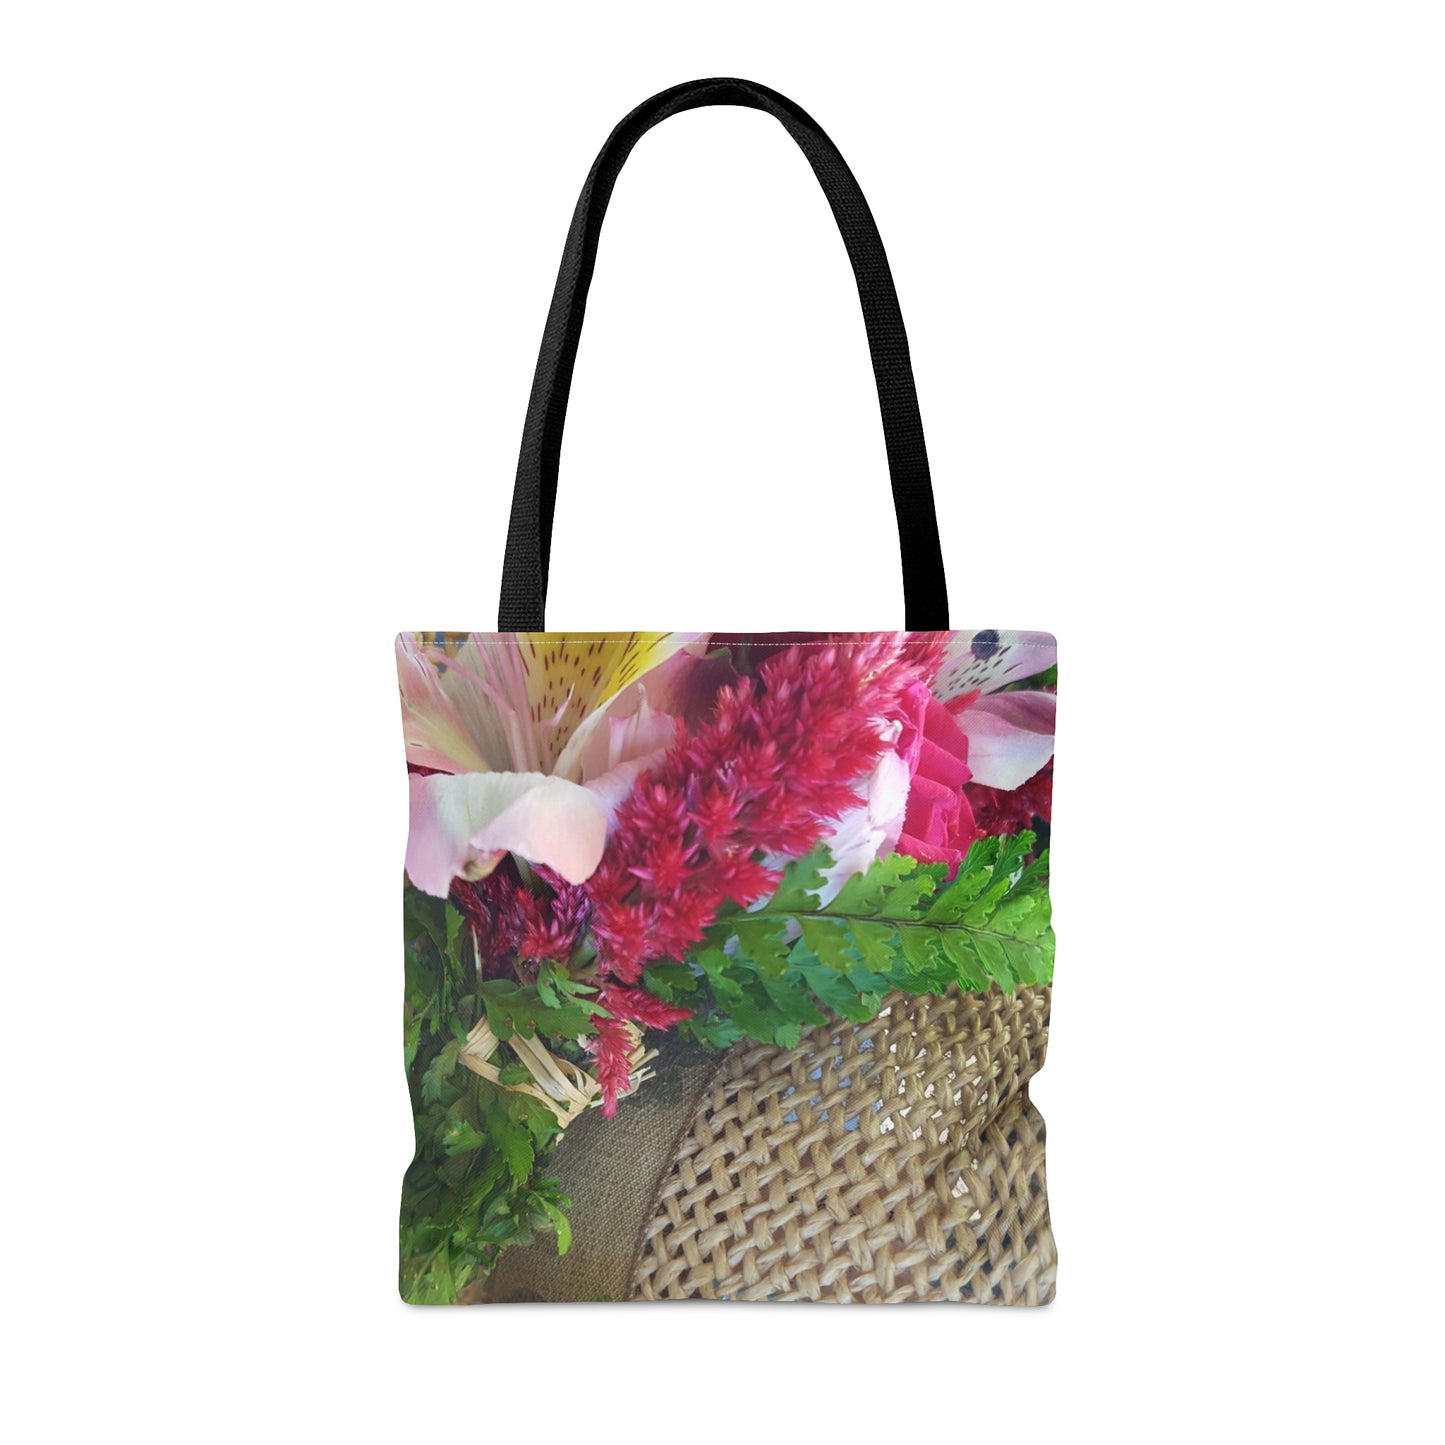 Wicker Floral Tote Bag